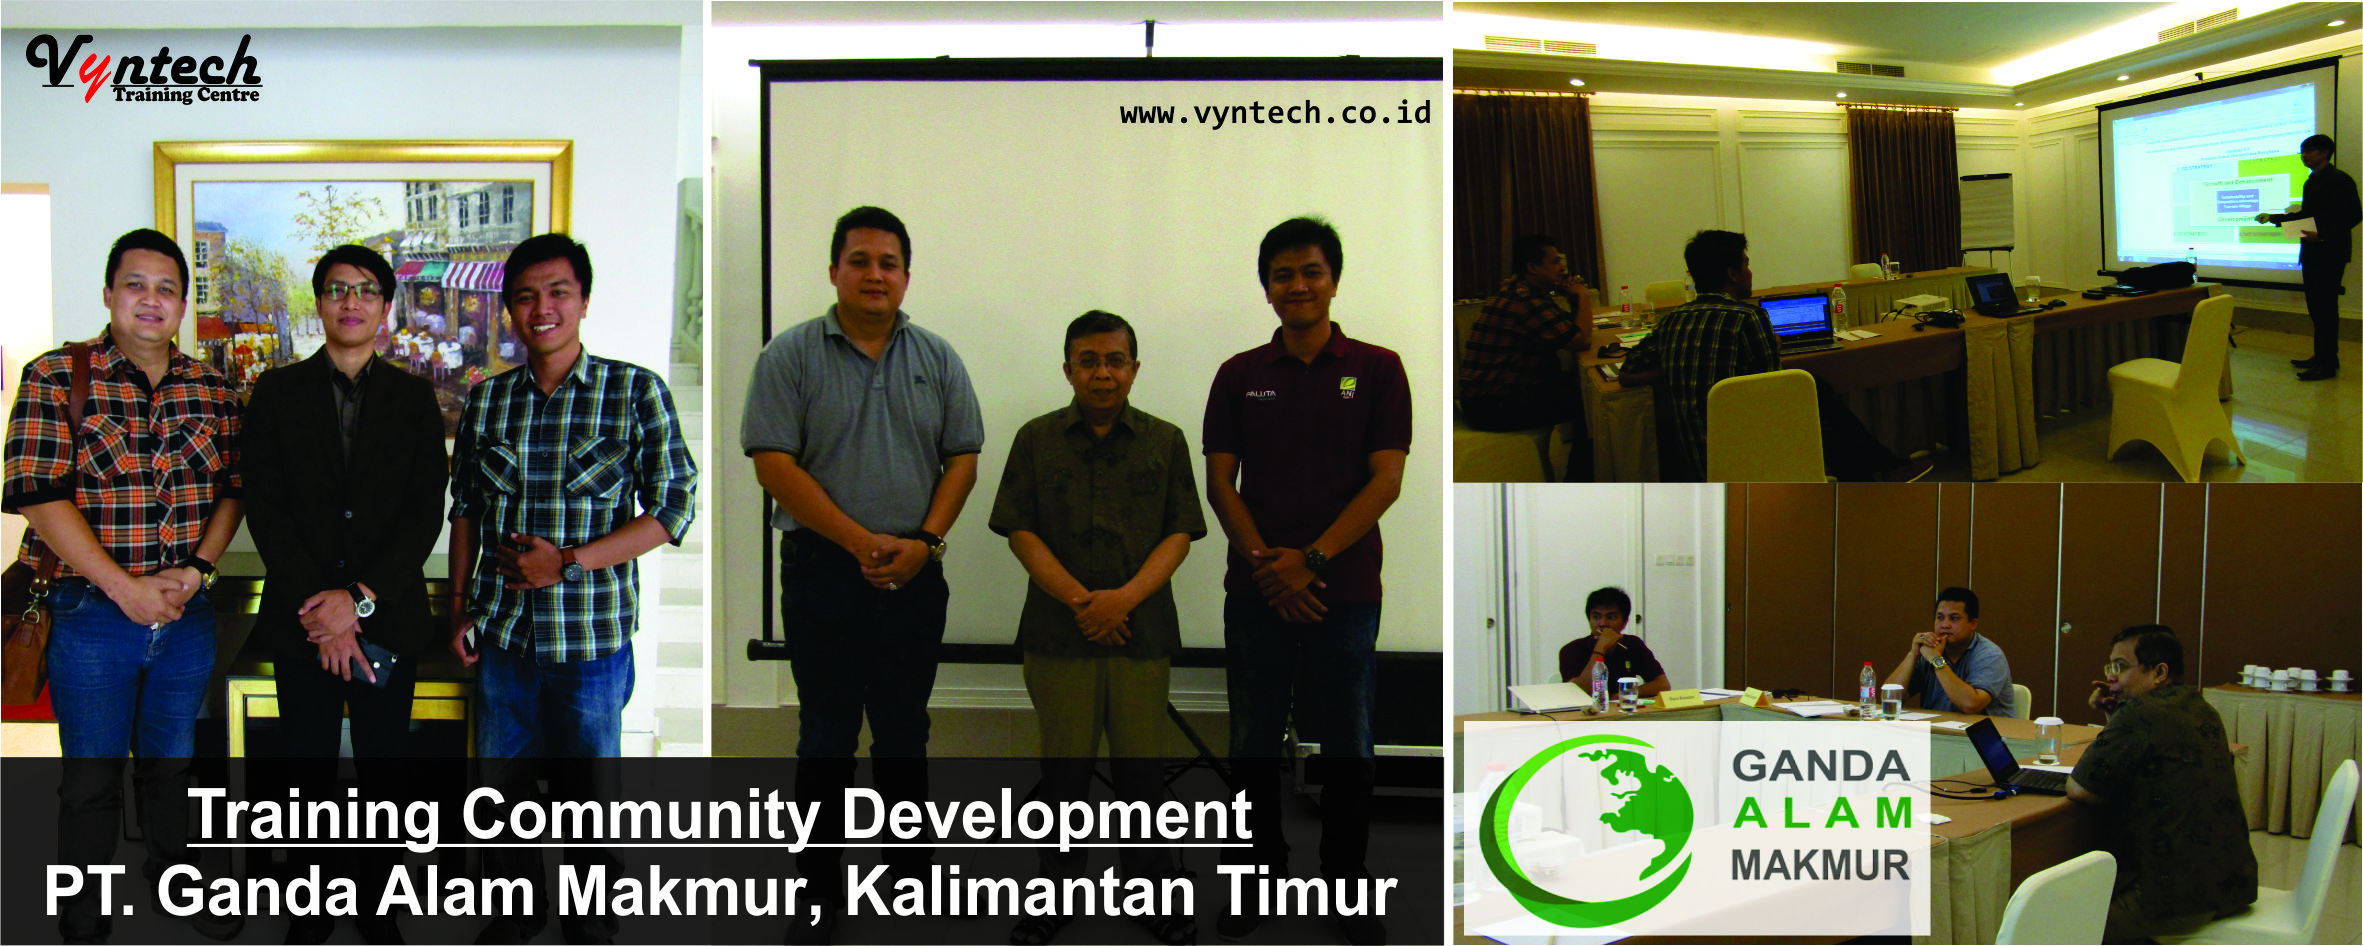 20170802 Training Community Development Comdev - PT. Ganda Alam Makmur, di Bali